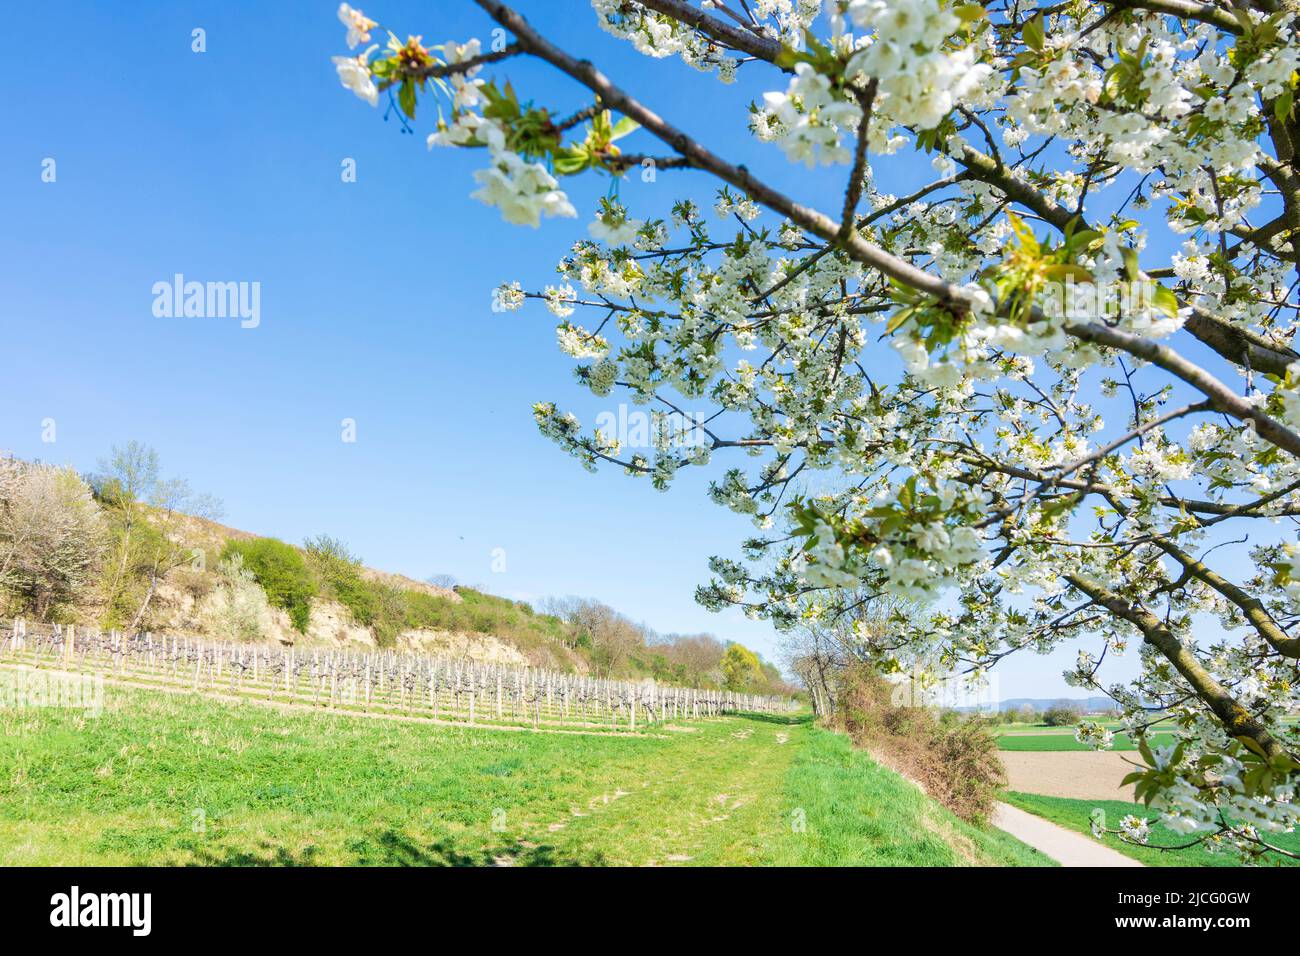 Hausleiten, fruit trees blossom, ridge Wagram, Donau region, Lower Austria, Austria Stock Photo